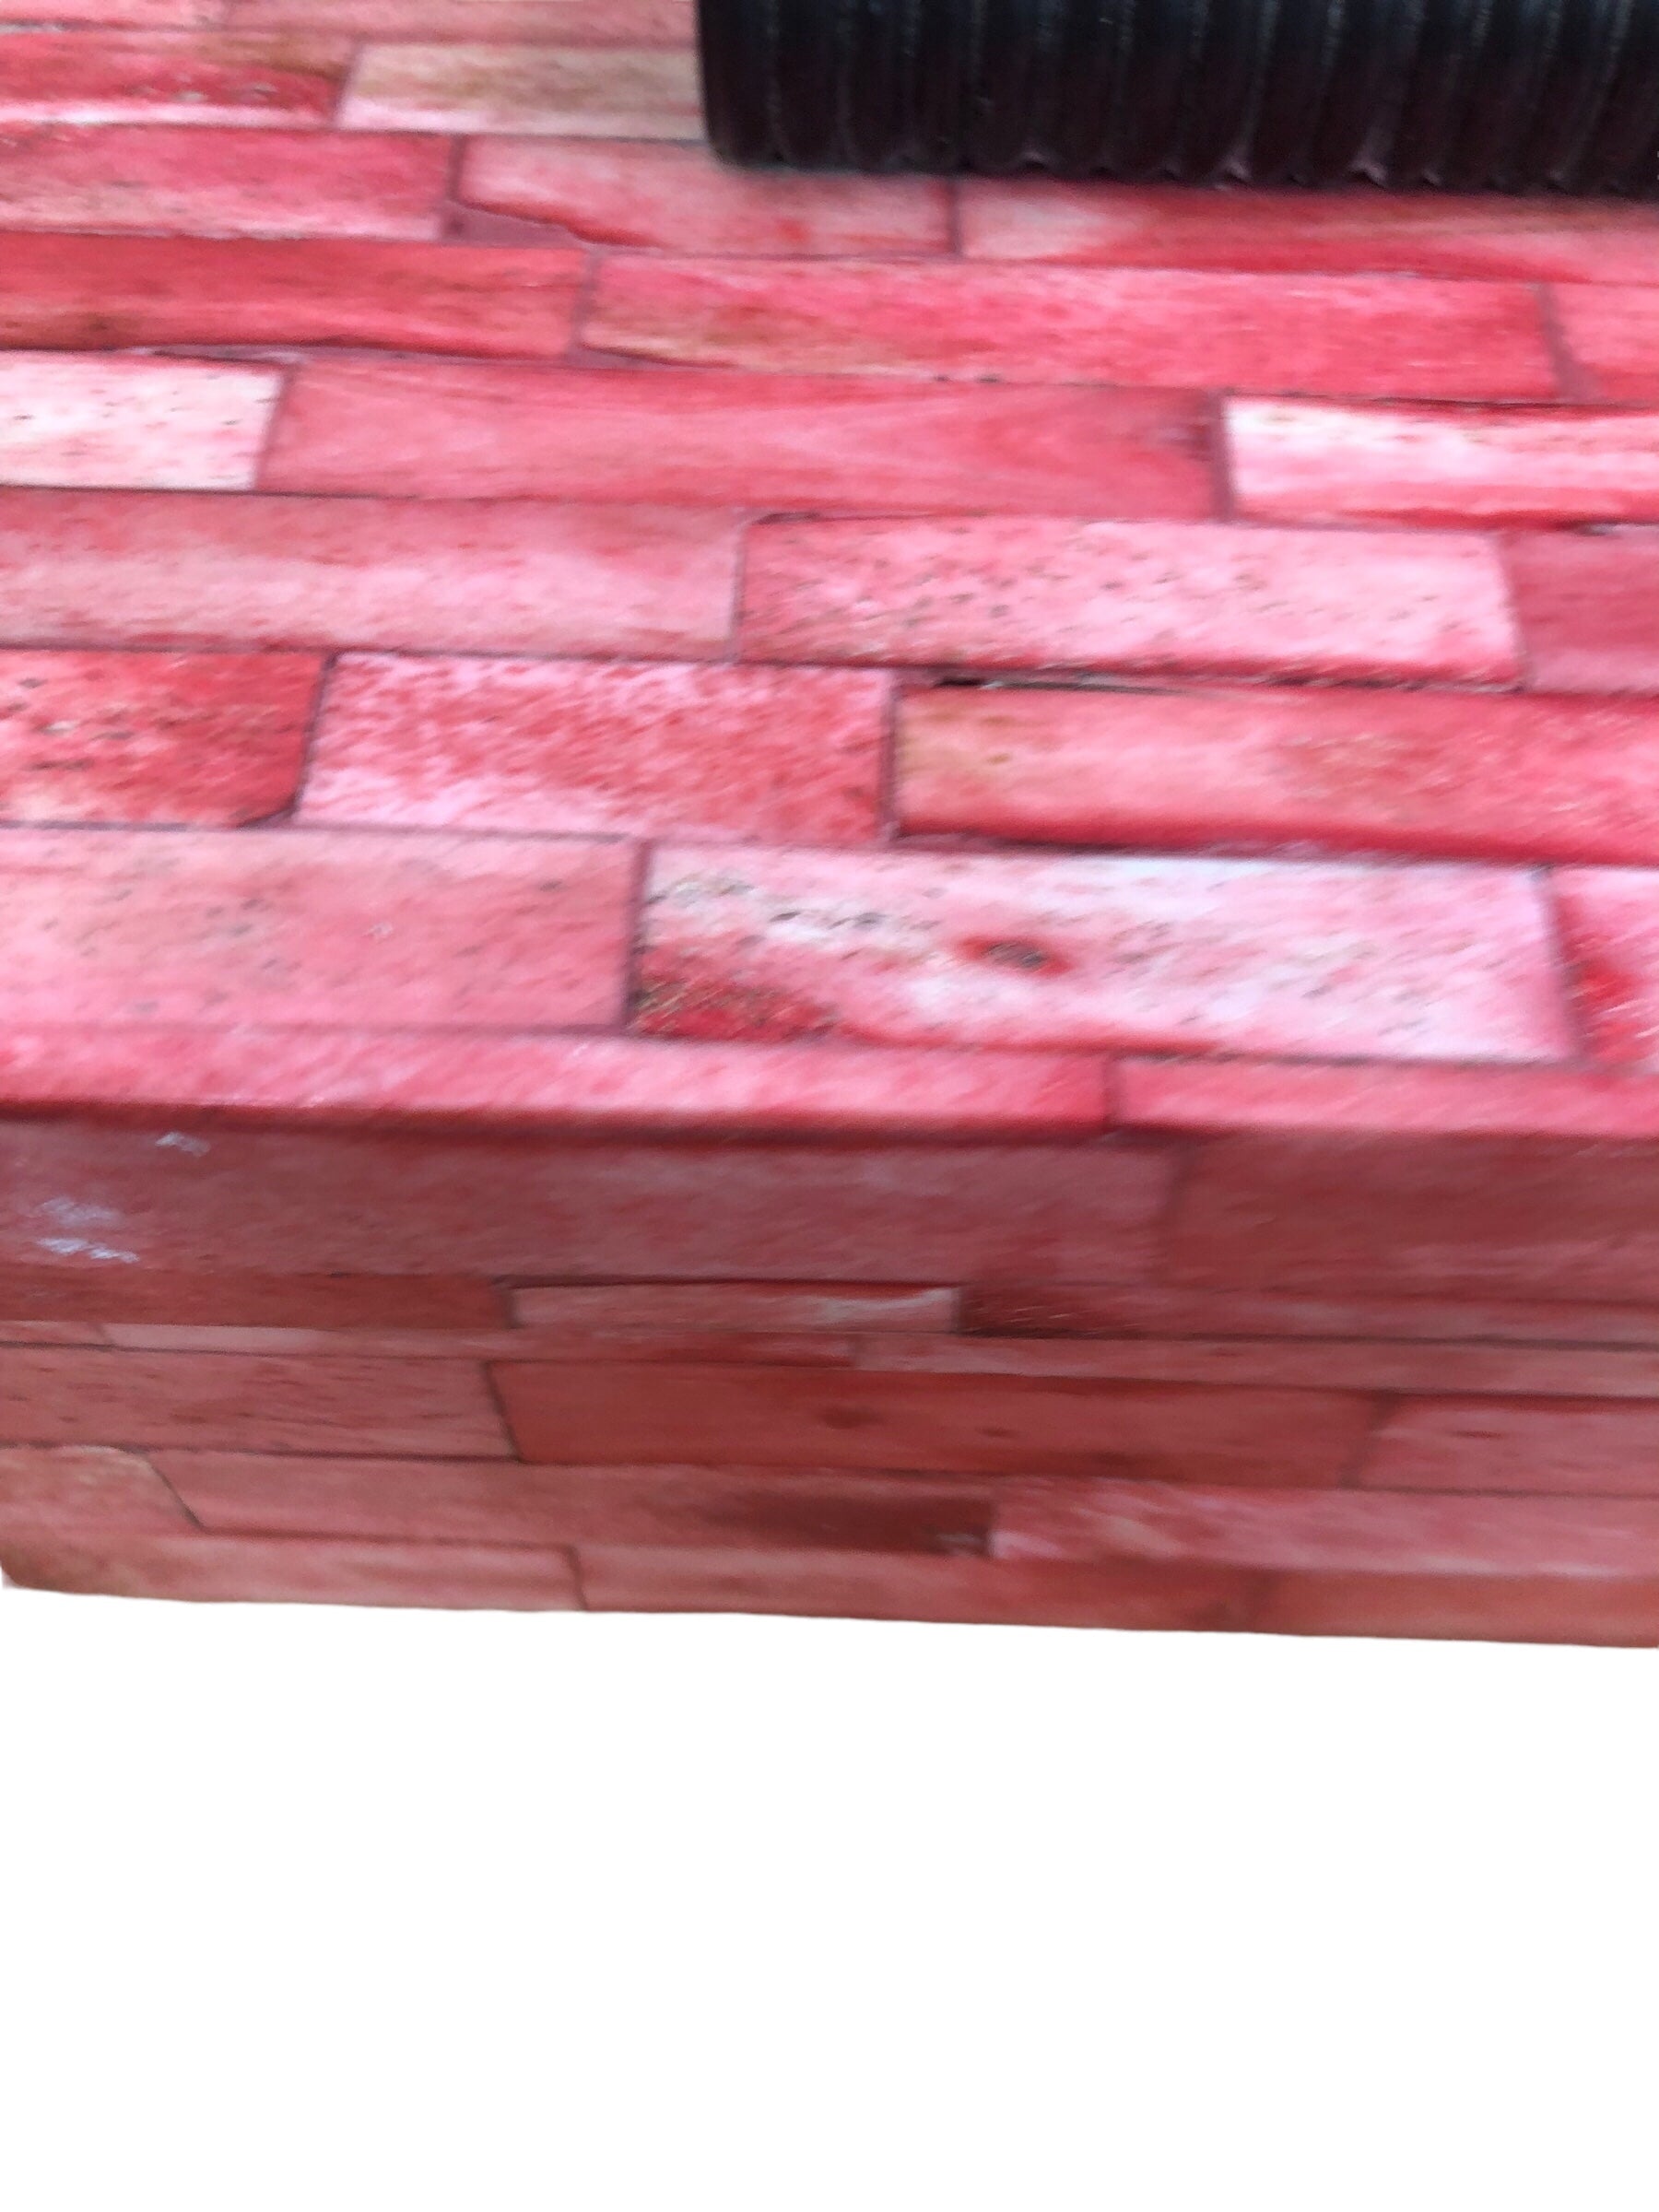 Pink treasure box/blk handle